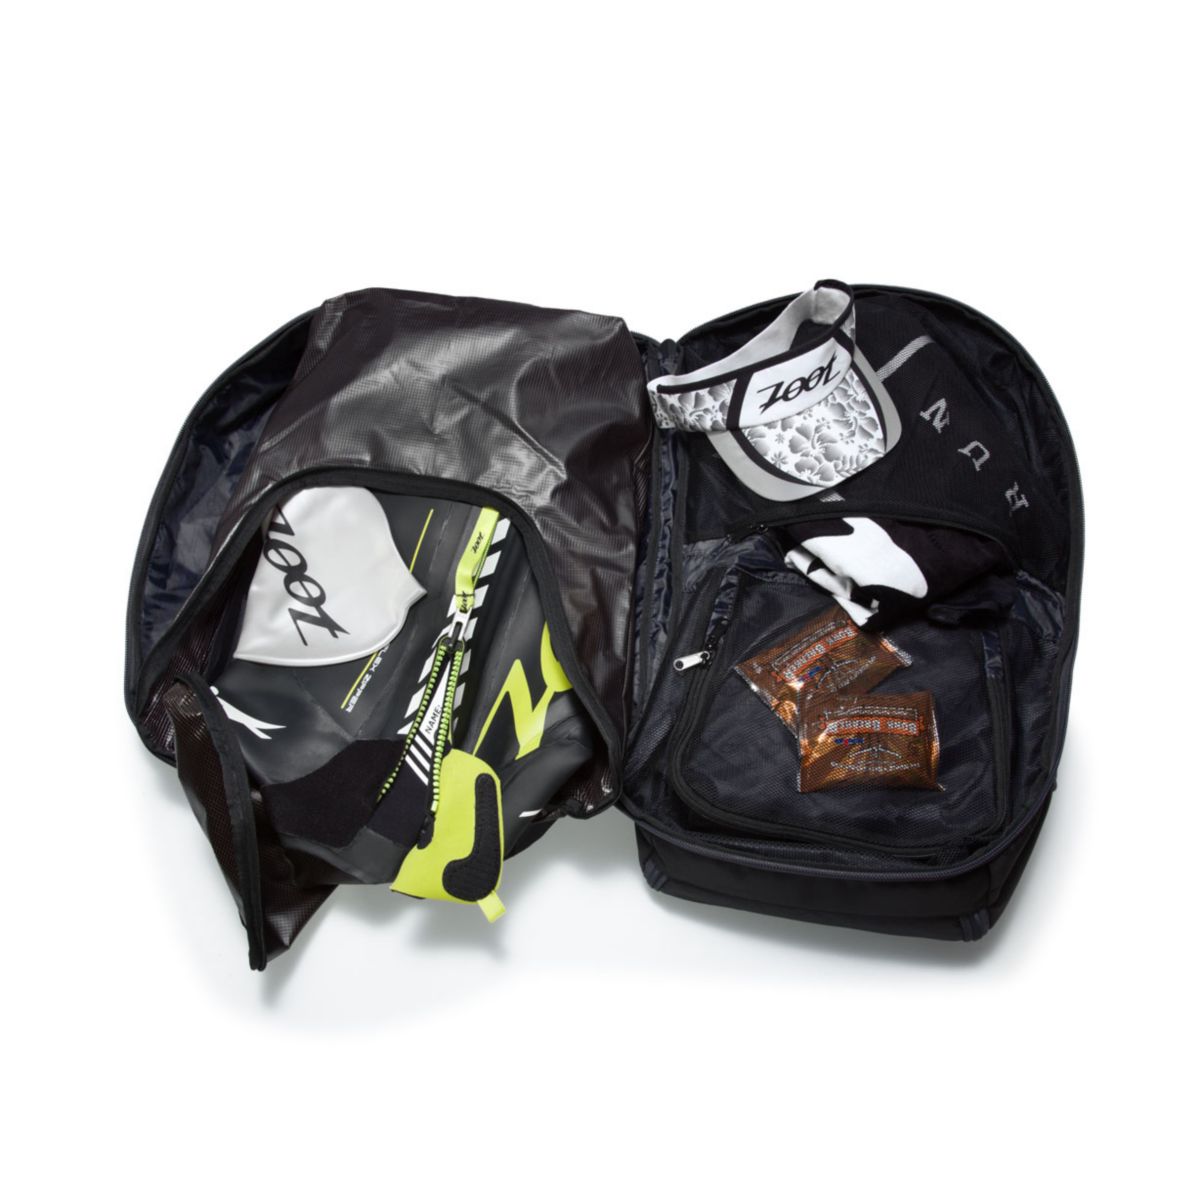 Zoot Ultra Tri Bag 2.0 Transition Triathlon Bag Black 